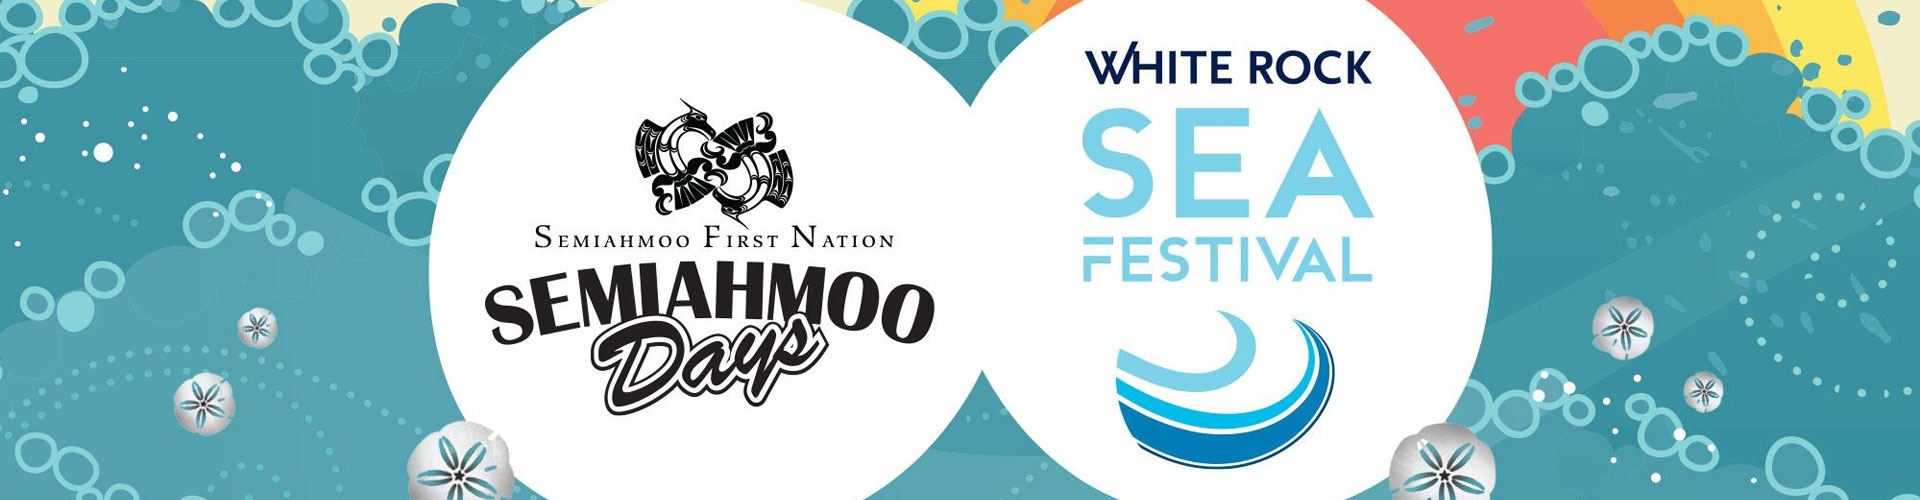 Semiahmoo First Nation Semiahmoo Days & White Rock Sea Festival